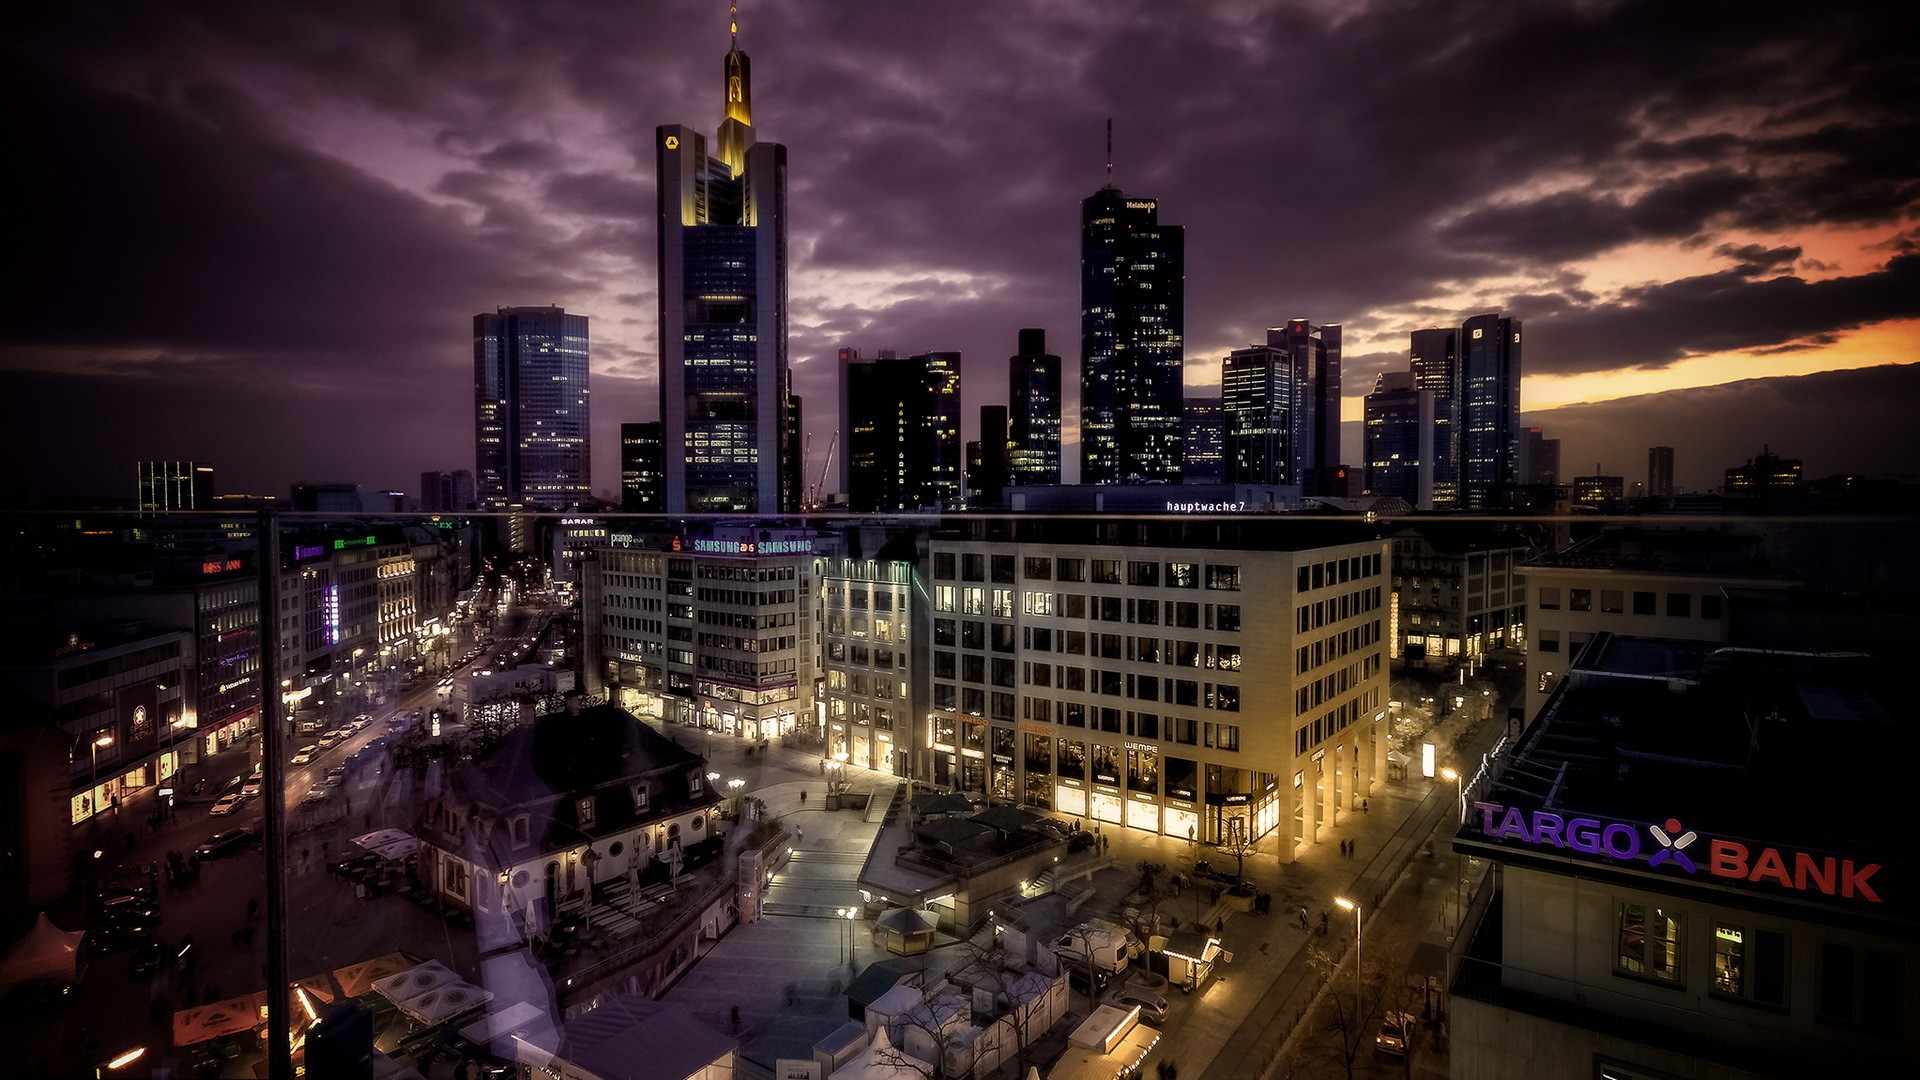 germany, man made, frankfurt, building, skyscraper, cities